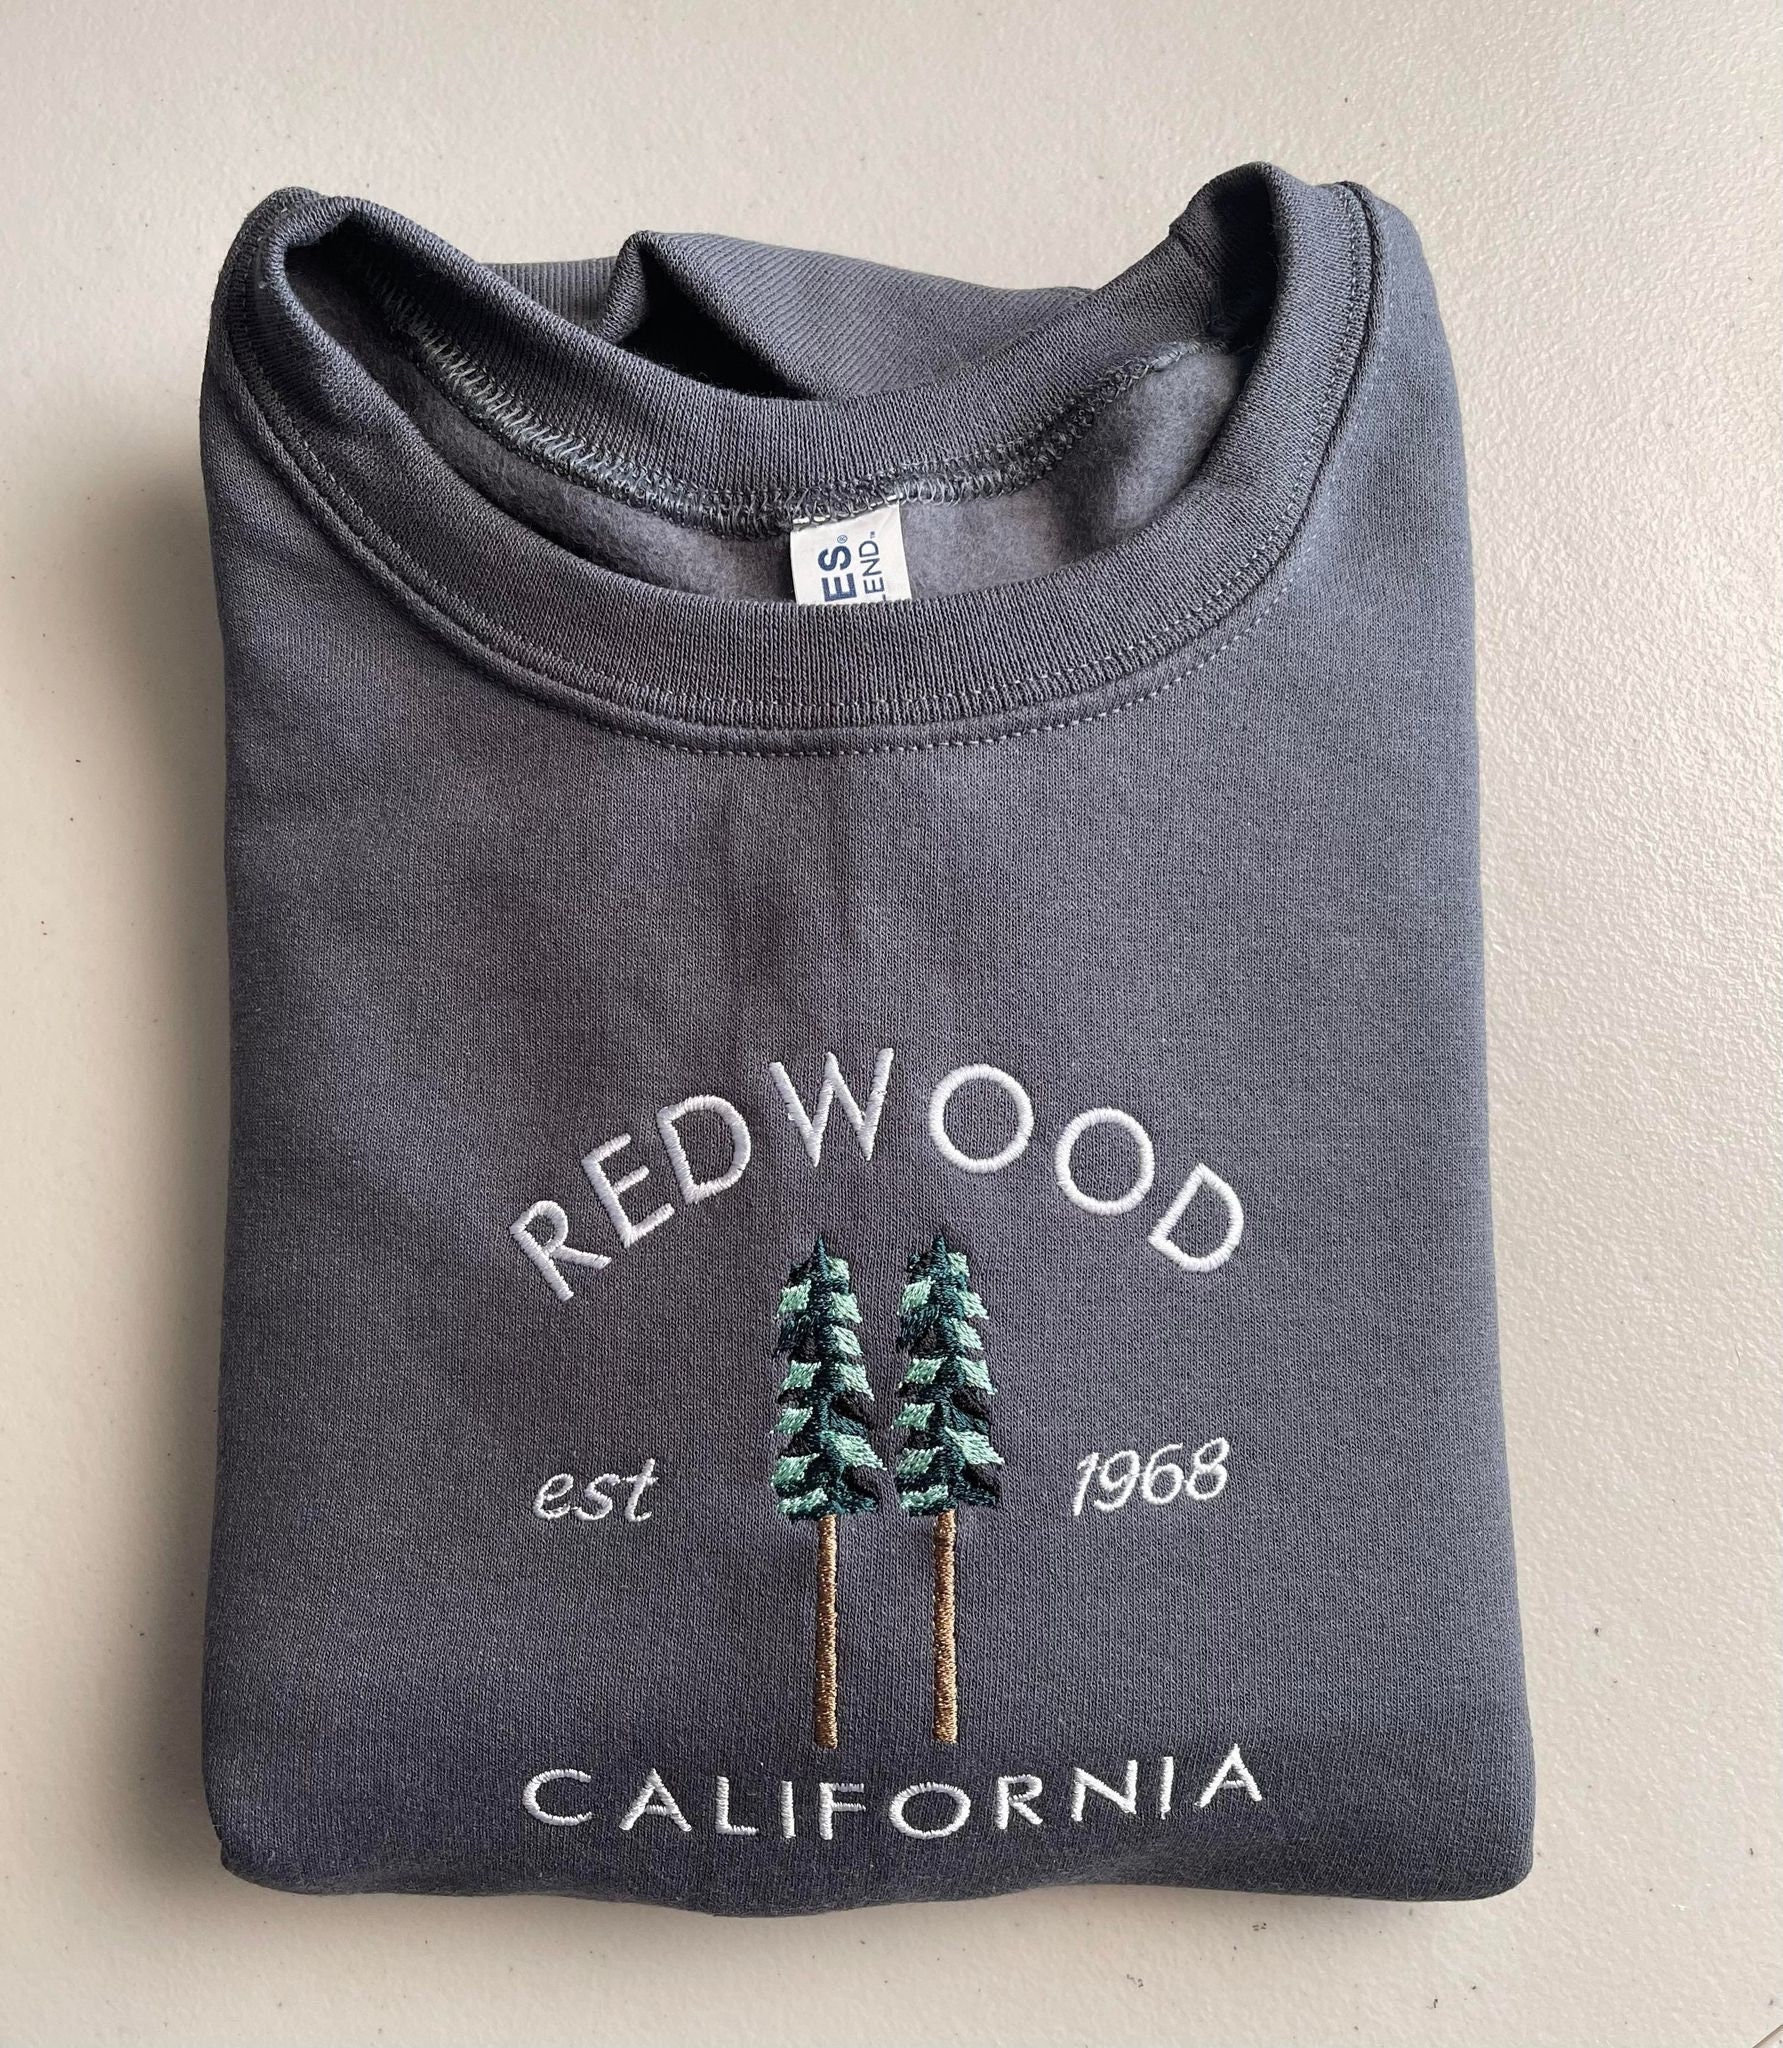 Embroidered National Park Sweatshirts Hoodies - Yellowstone, Yosemite, Acadia...